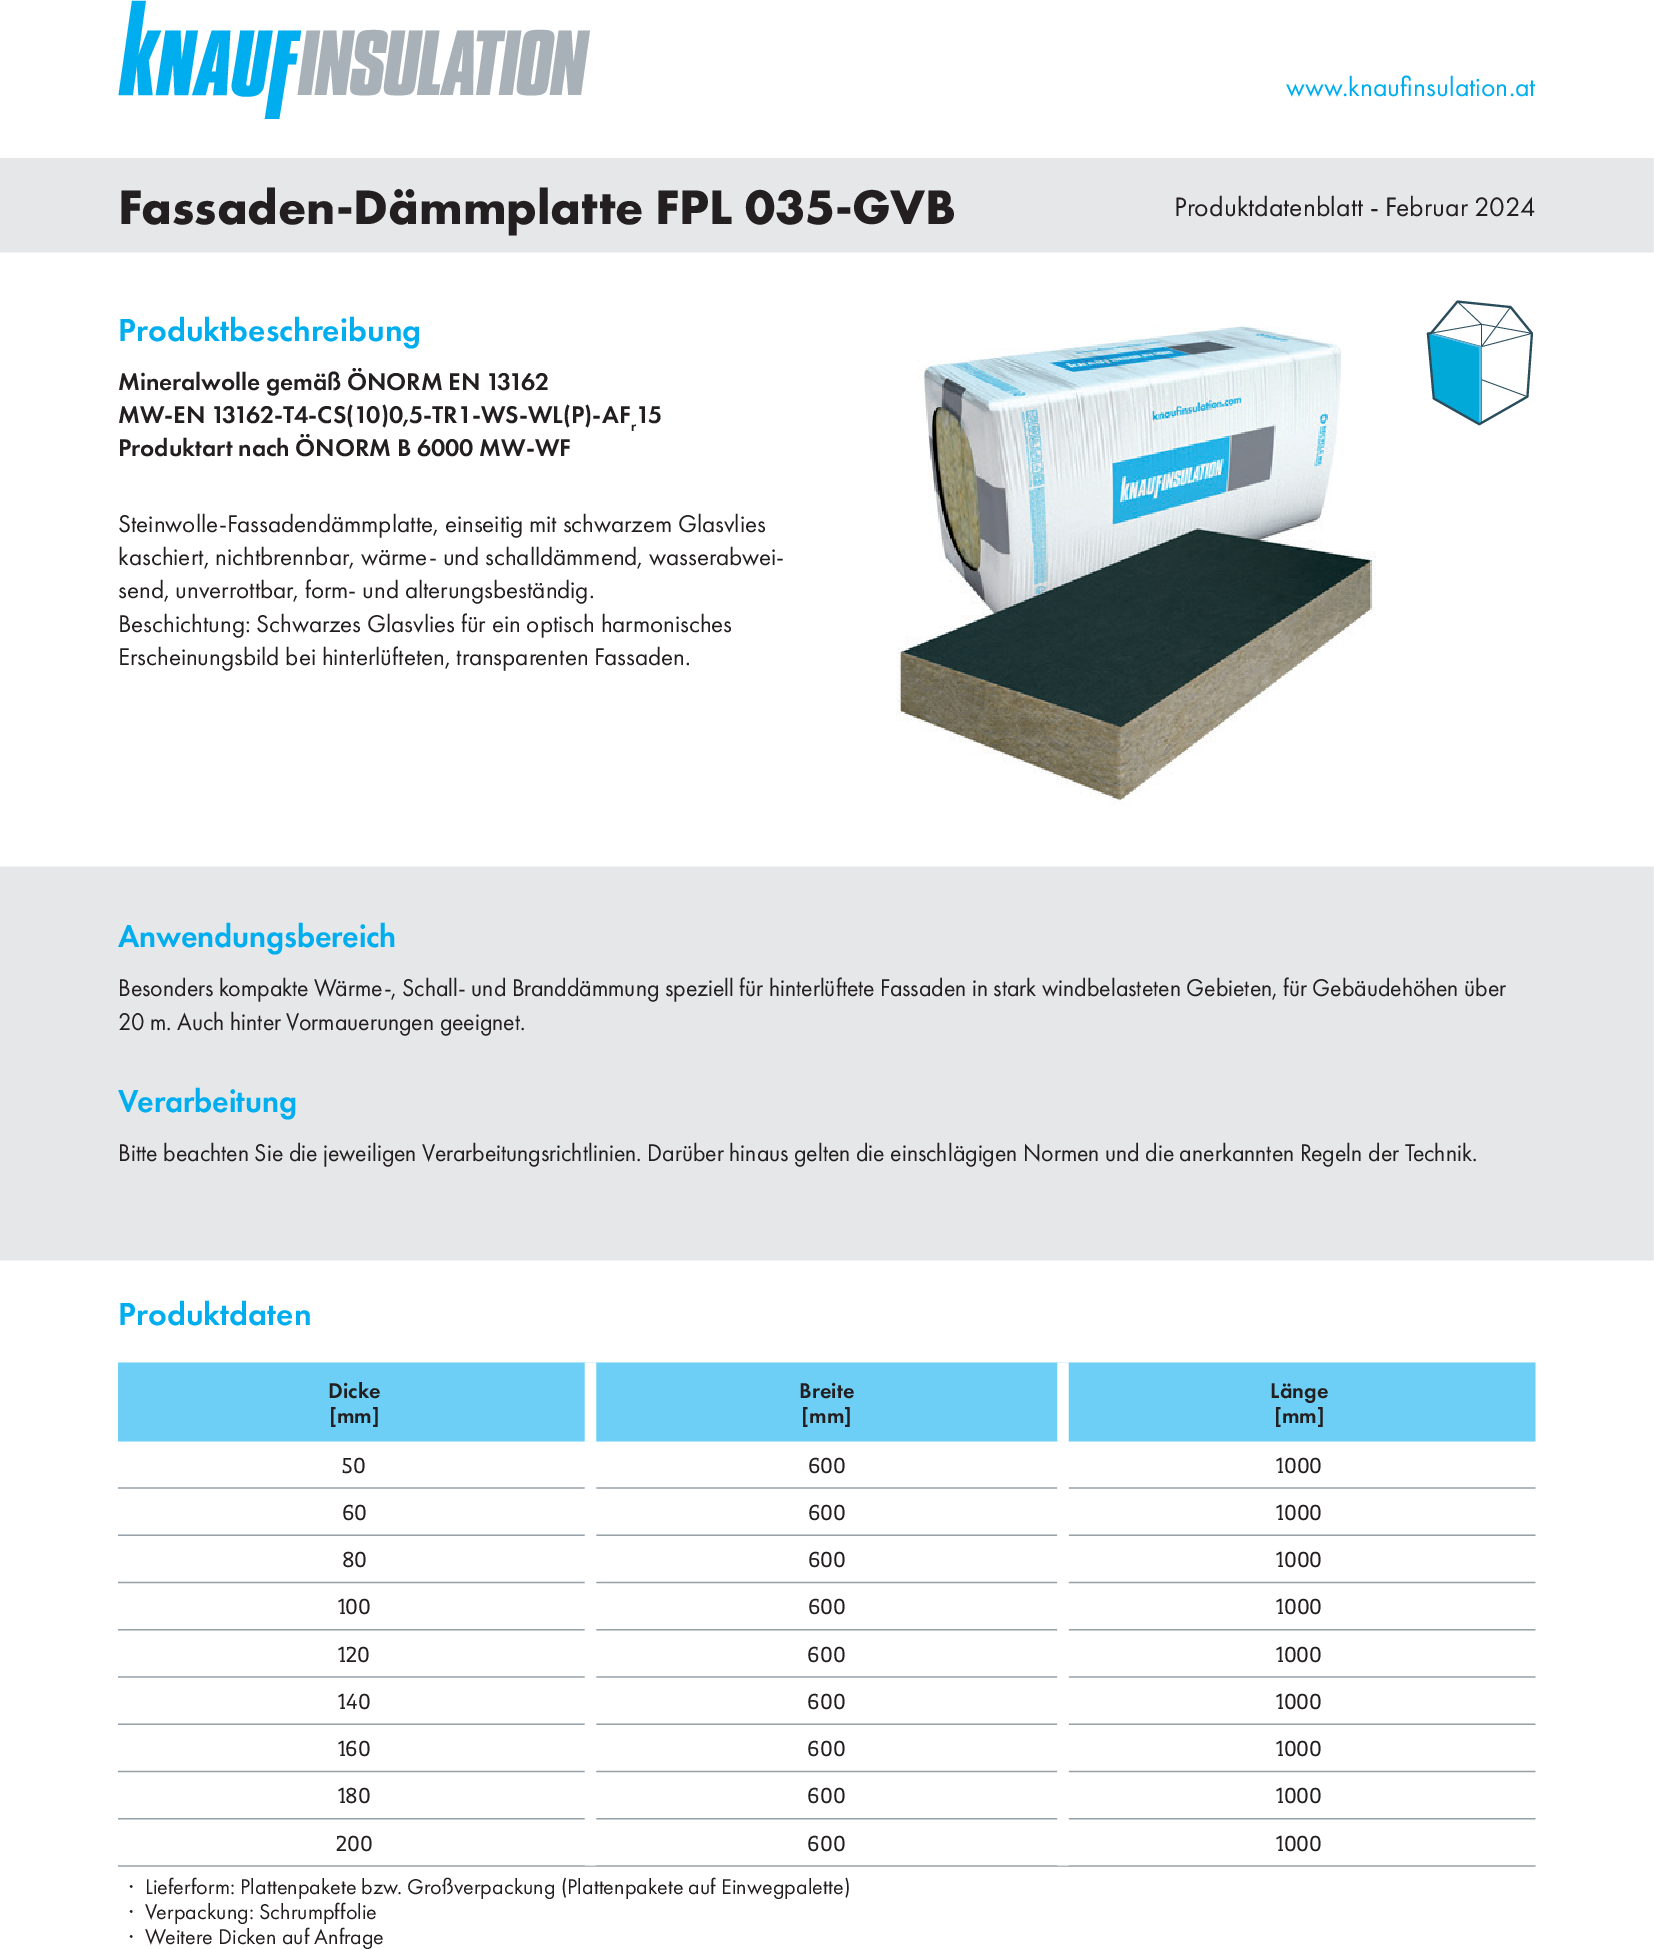 Fassaden-Dämmplatte FPL 035-GVB, Produktdatenblatt